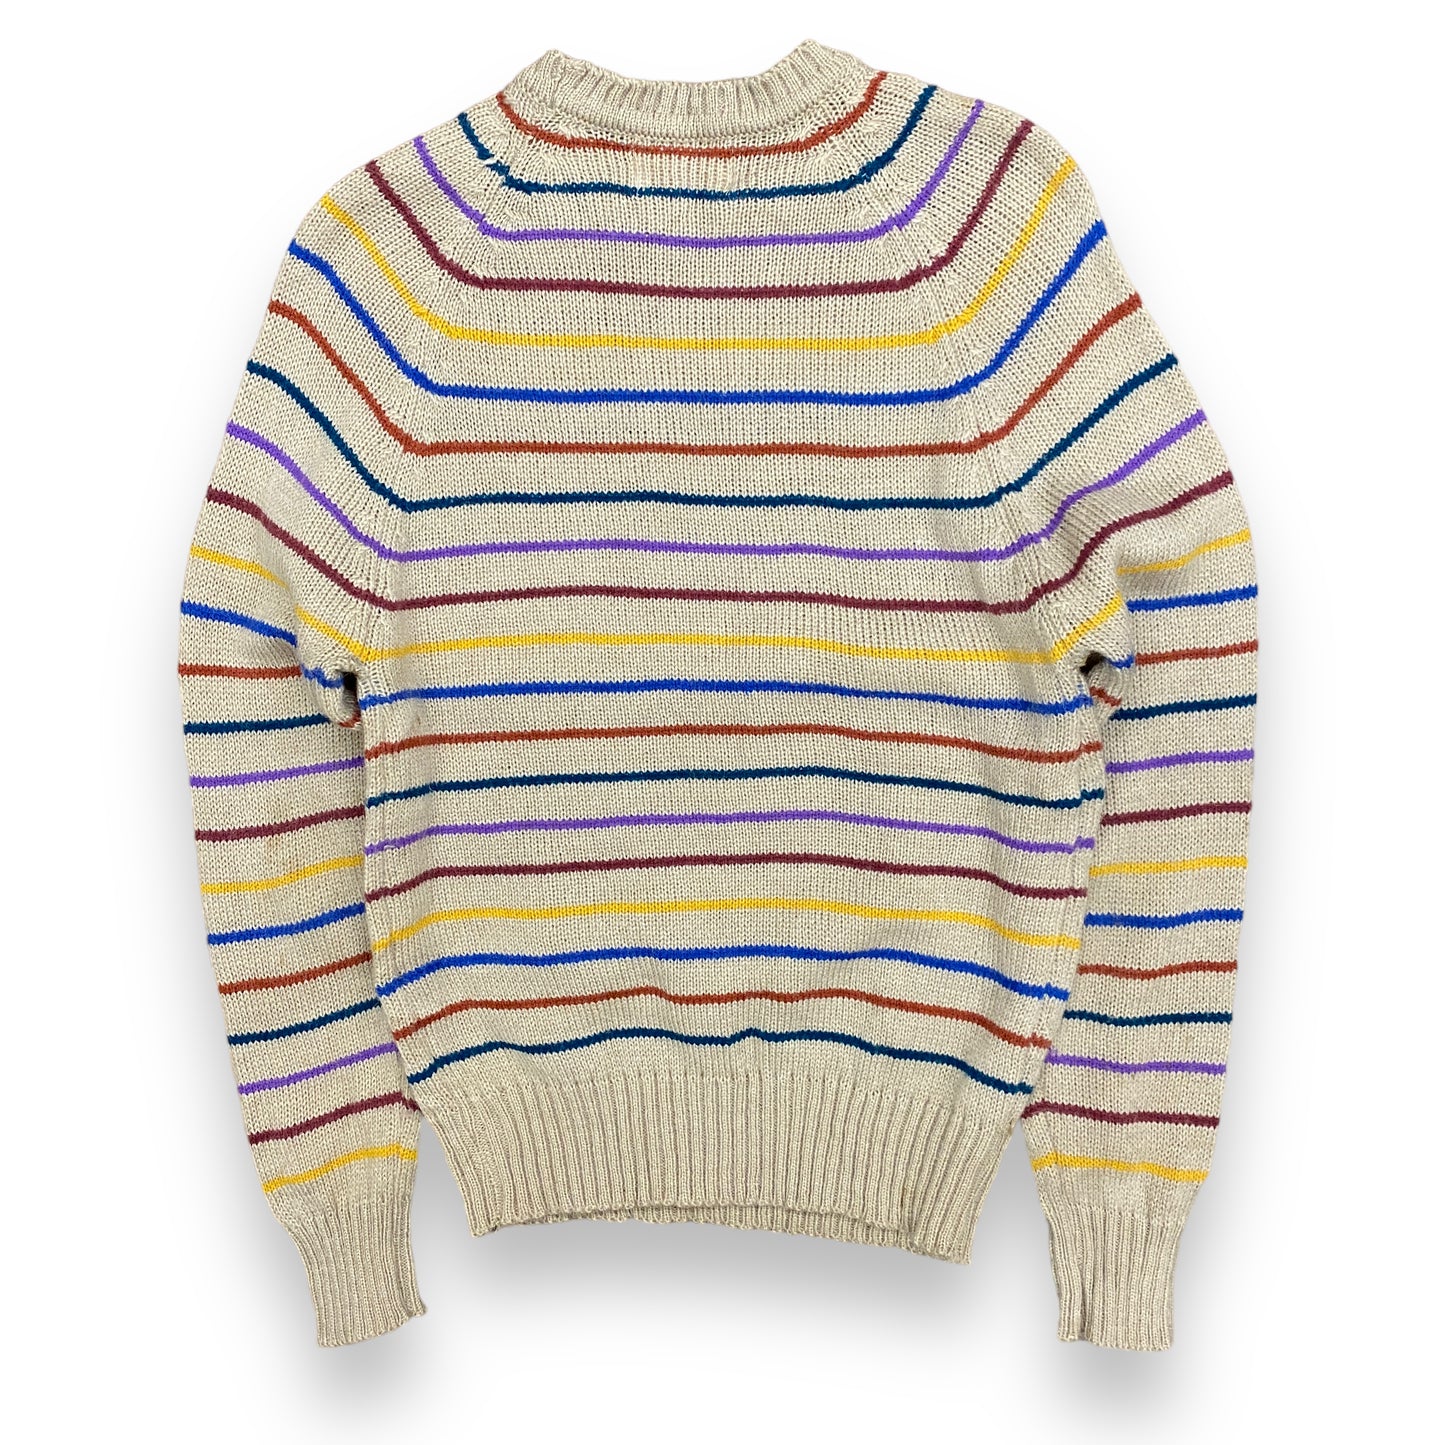 Vintage 1980s Tan Striped Raglan Sweater - Size Large